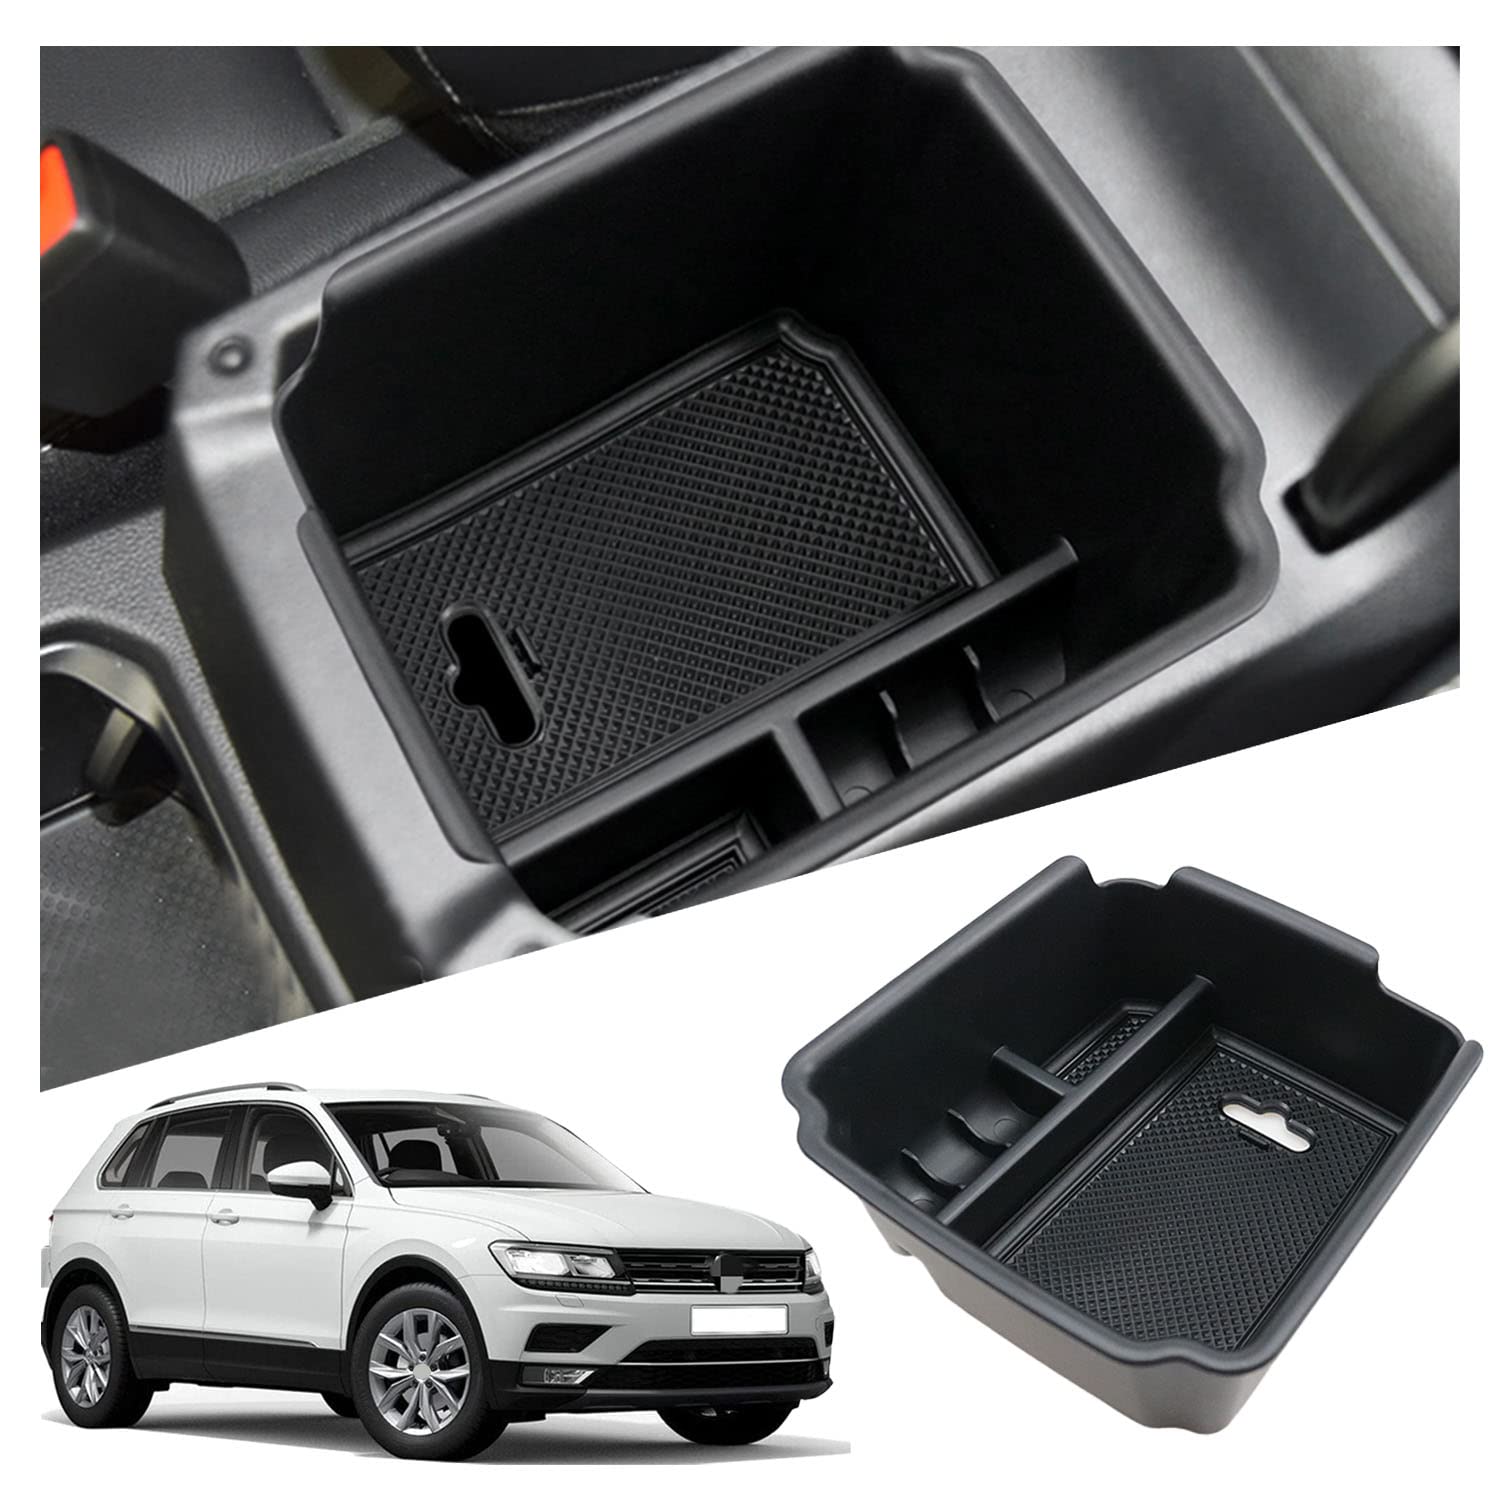 VW Tiguan Allspace Center Armrest Storage Tray 2018+ - LFOTPP Car Accessories